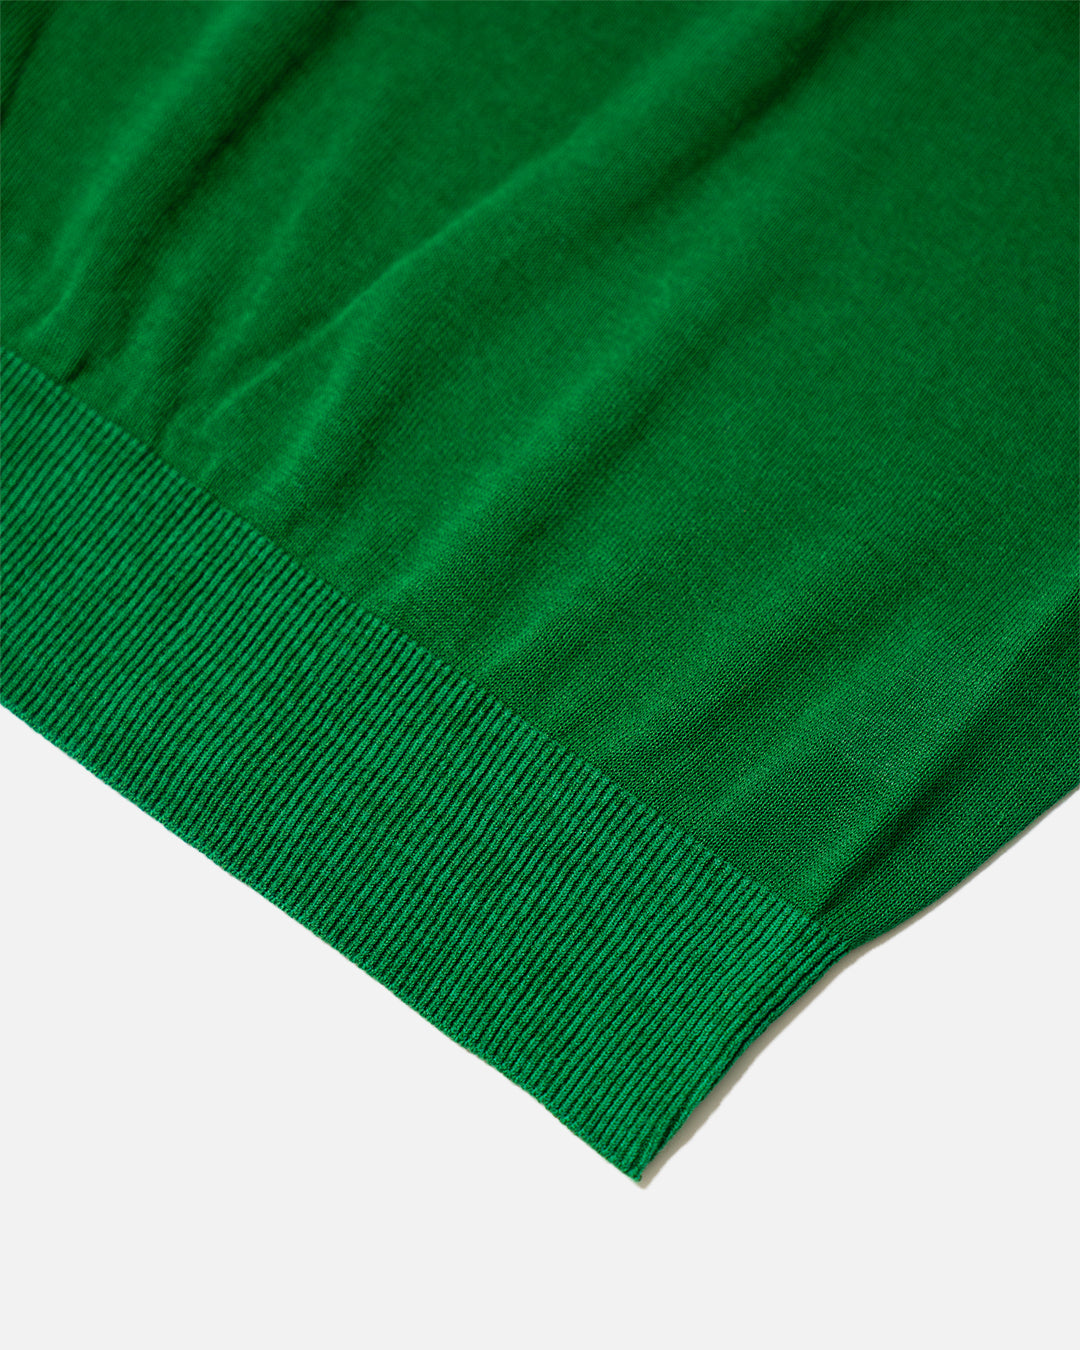 The Decorum Off Duty Green Knit T-Shirt (New)